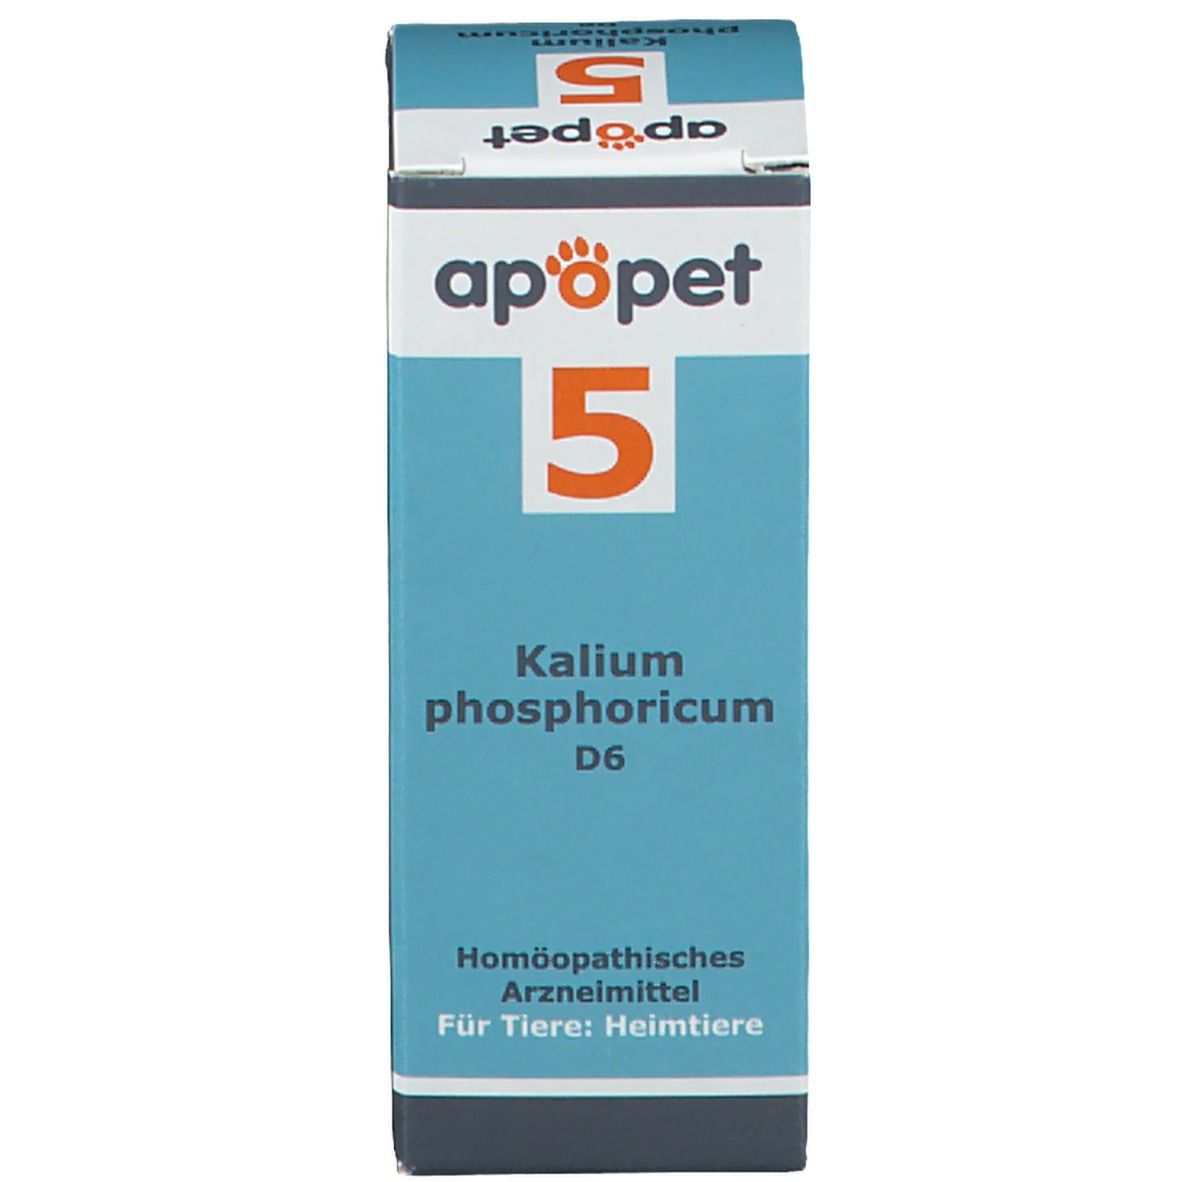 apopet® Schüßler Salz Nr. 5 Kalium phosphoricum D6 ad us. vet.